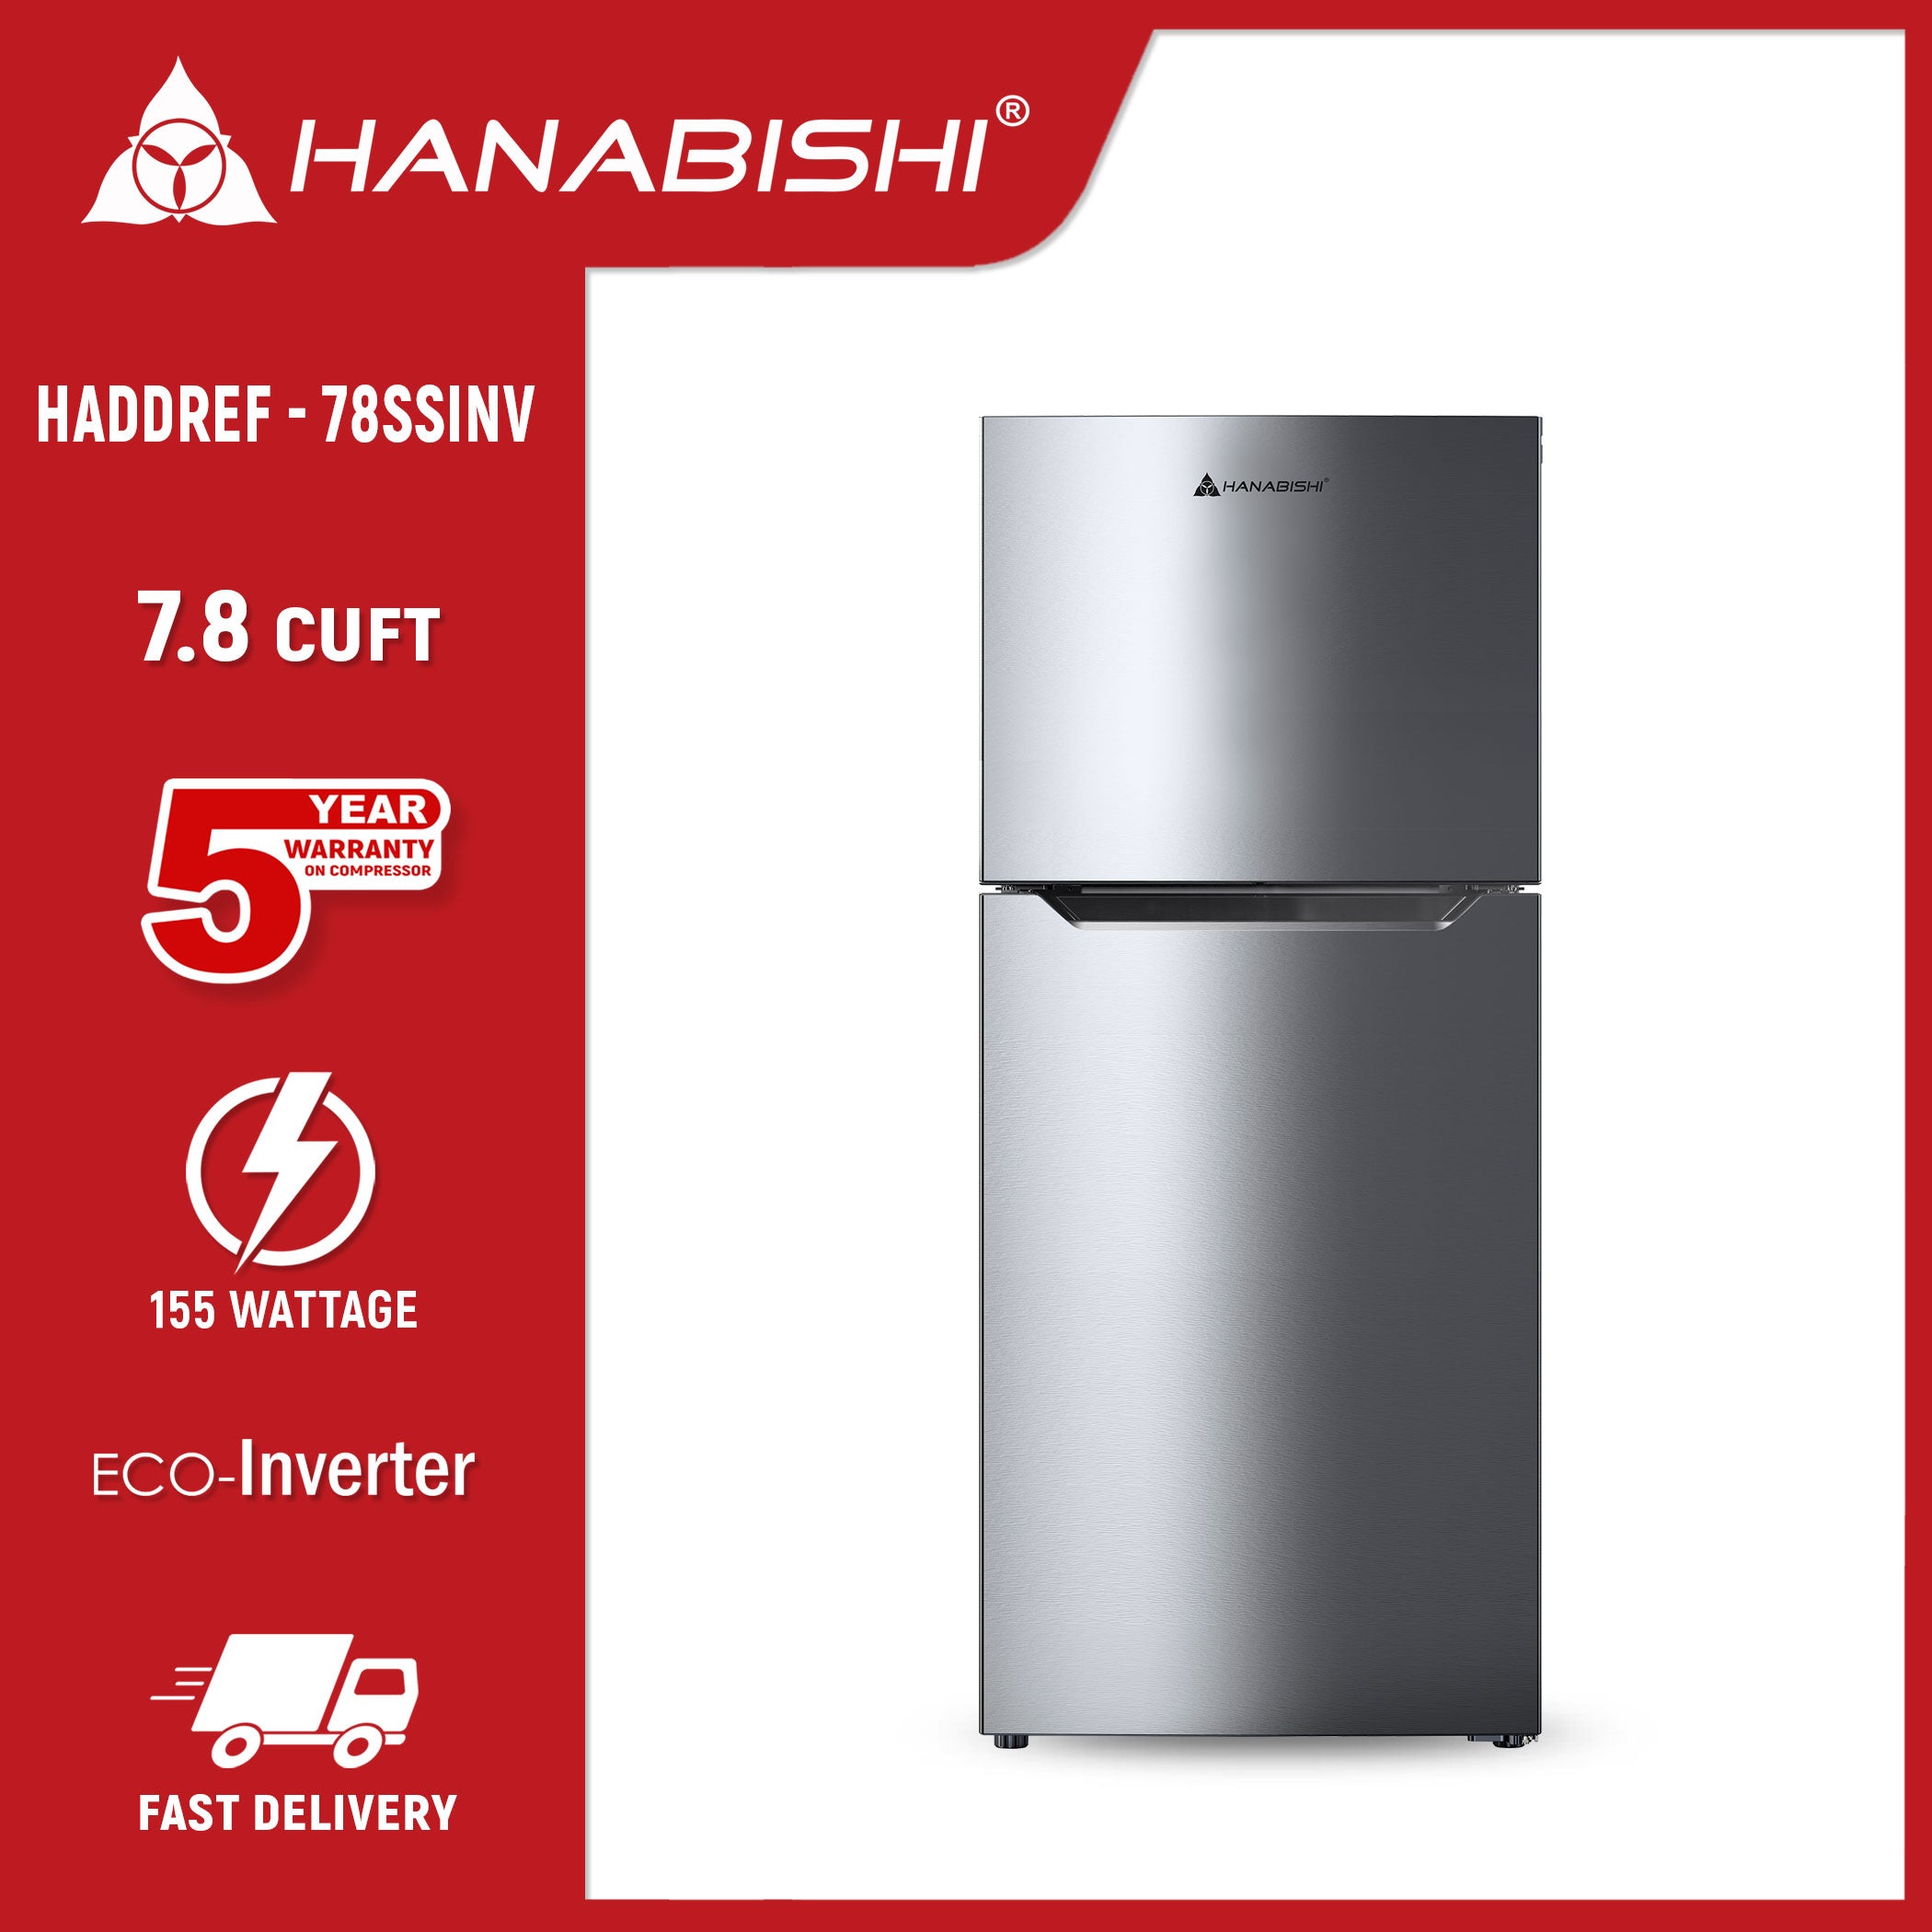 HANABISHI 7.8 cu.ft. Double Door Inverter Refrigerator HADDREF-78SSINV Hanabishi